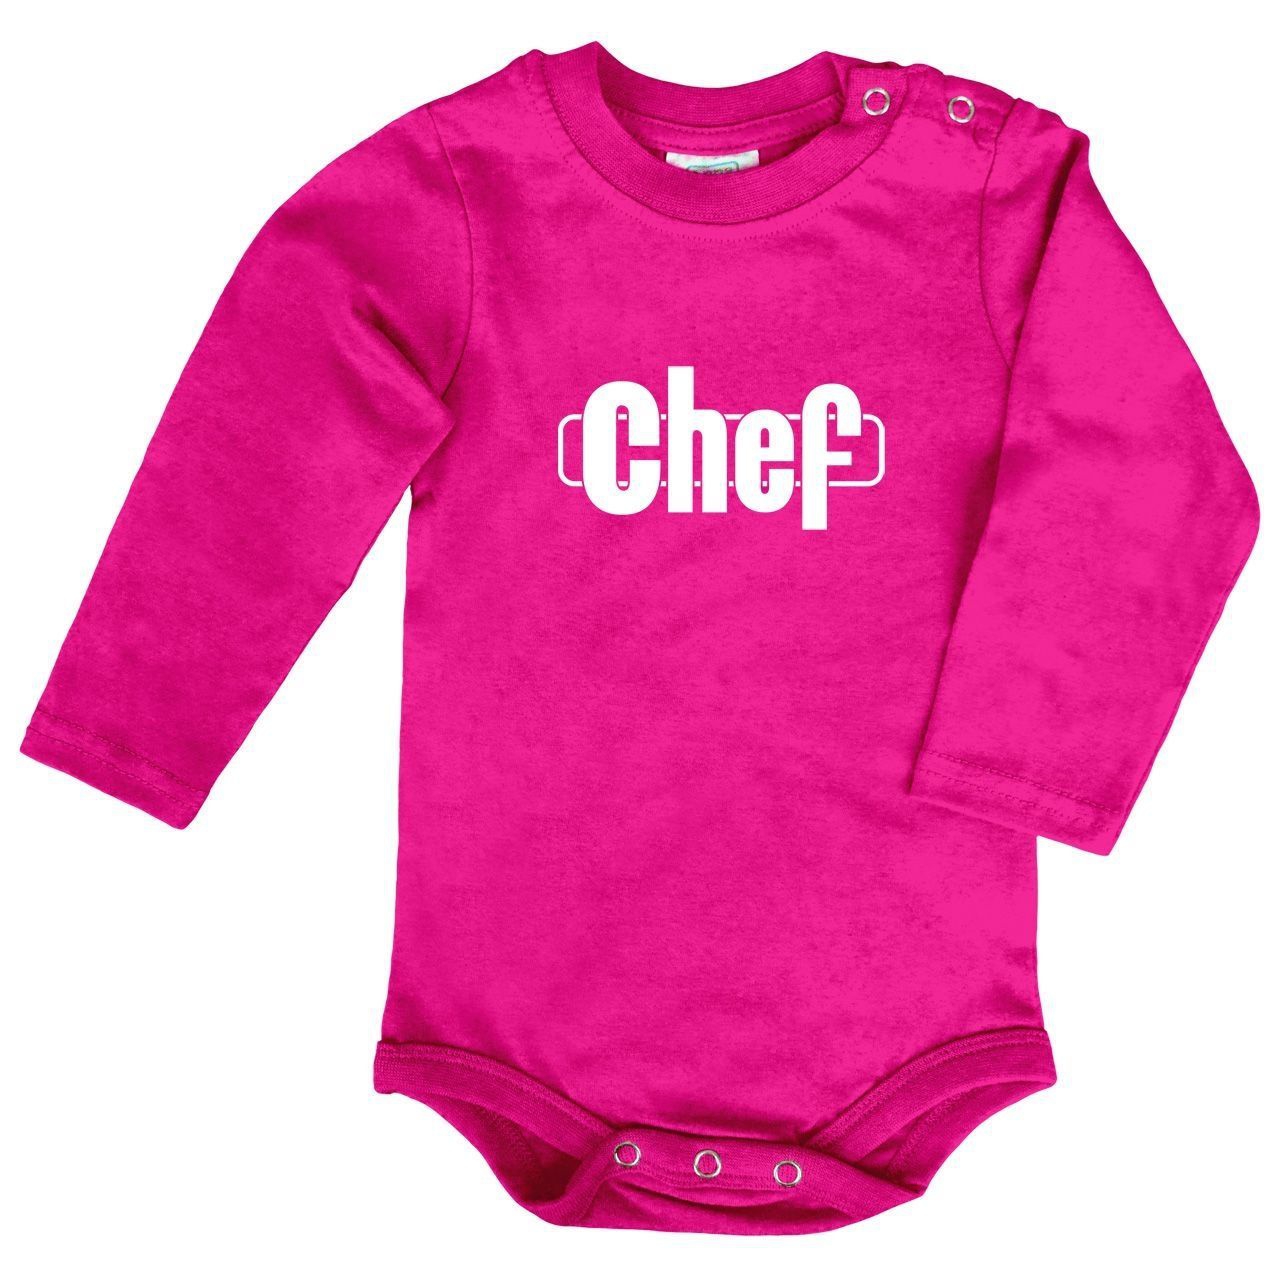 Chef Baby Body Langarm pink 68 / 74